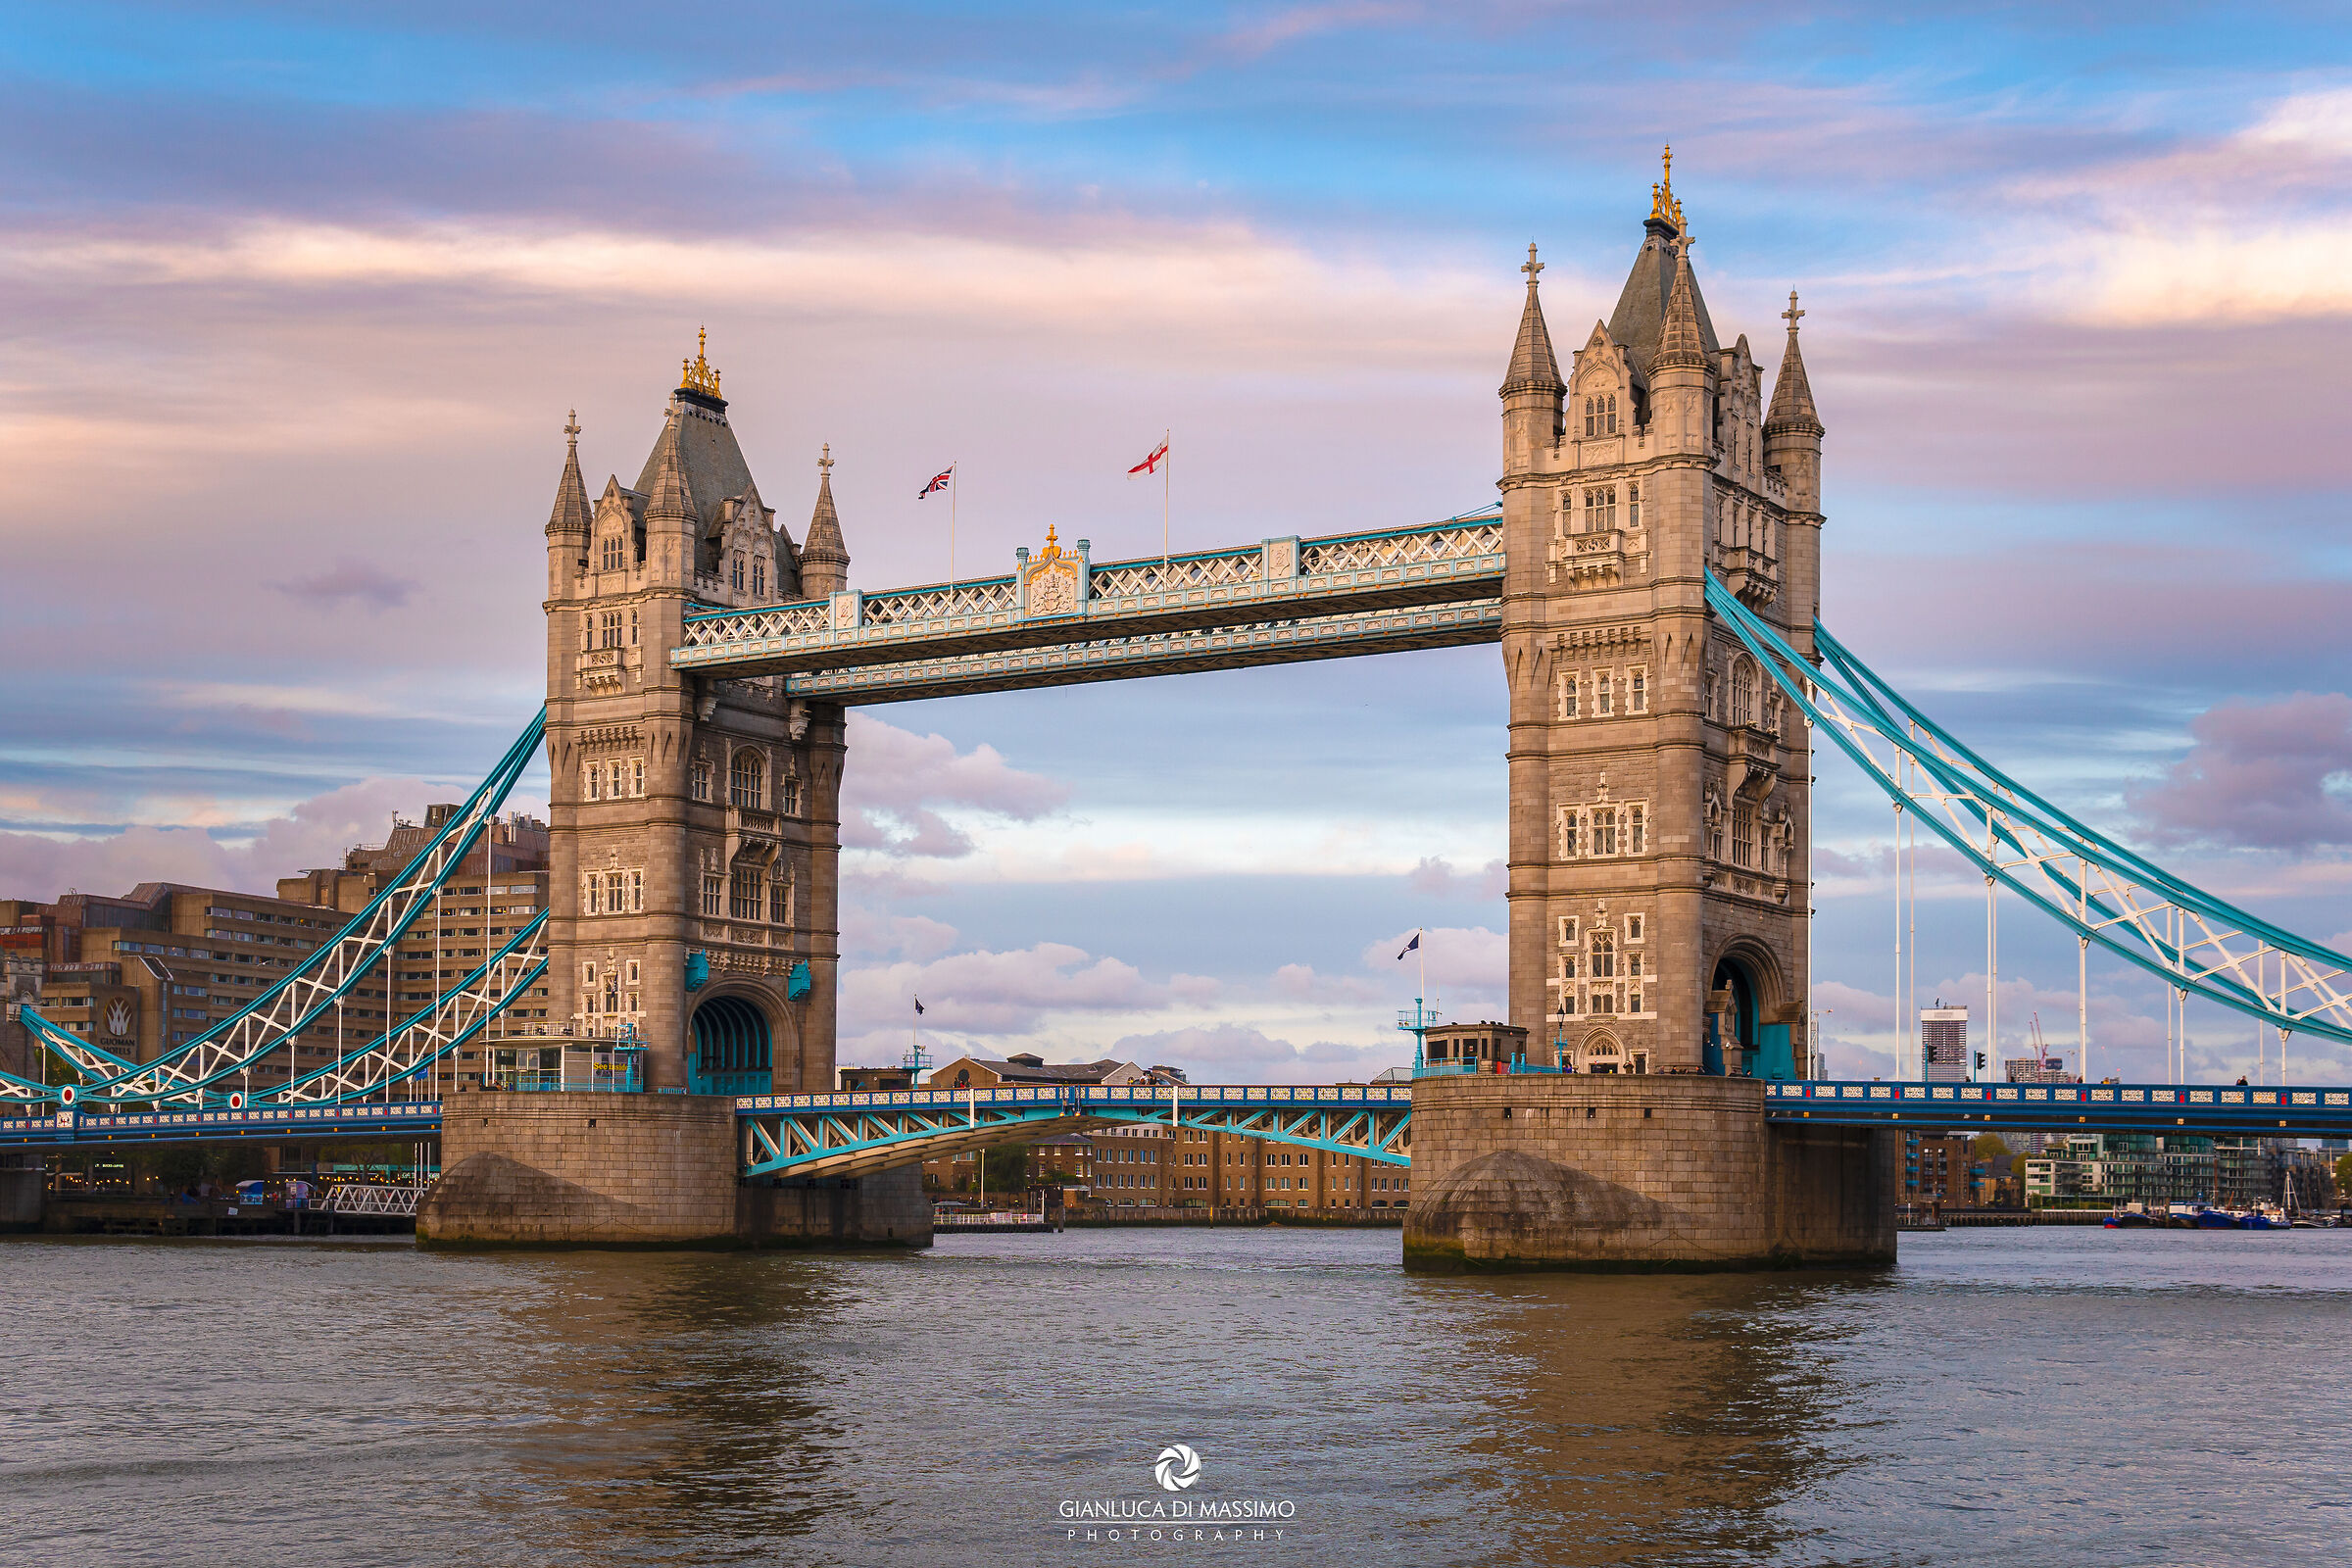 His Majesty, The Tower Bridge...